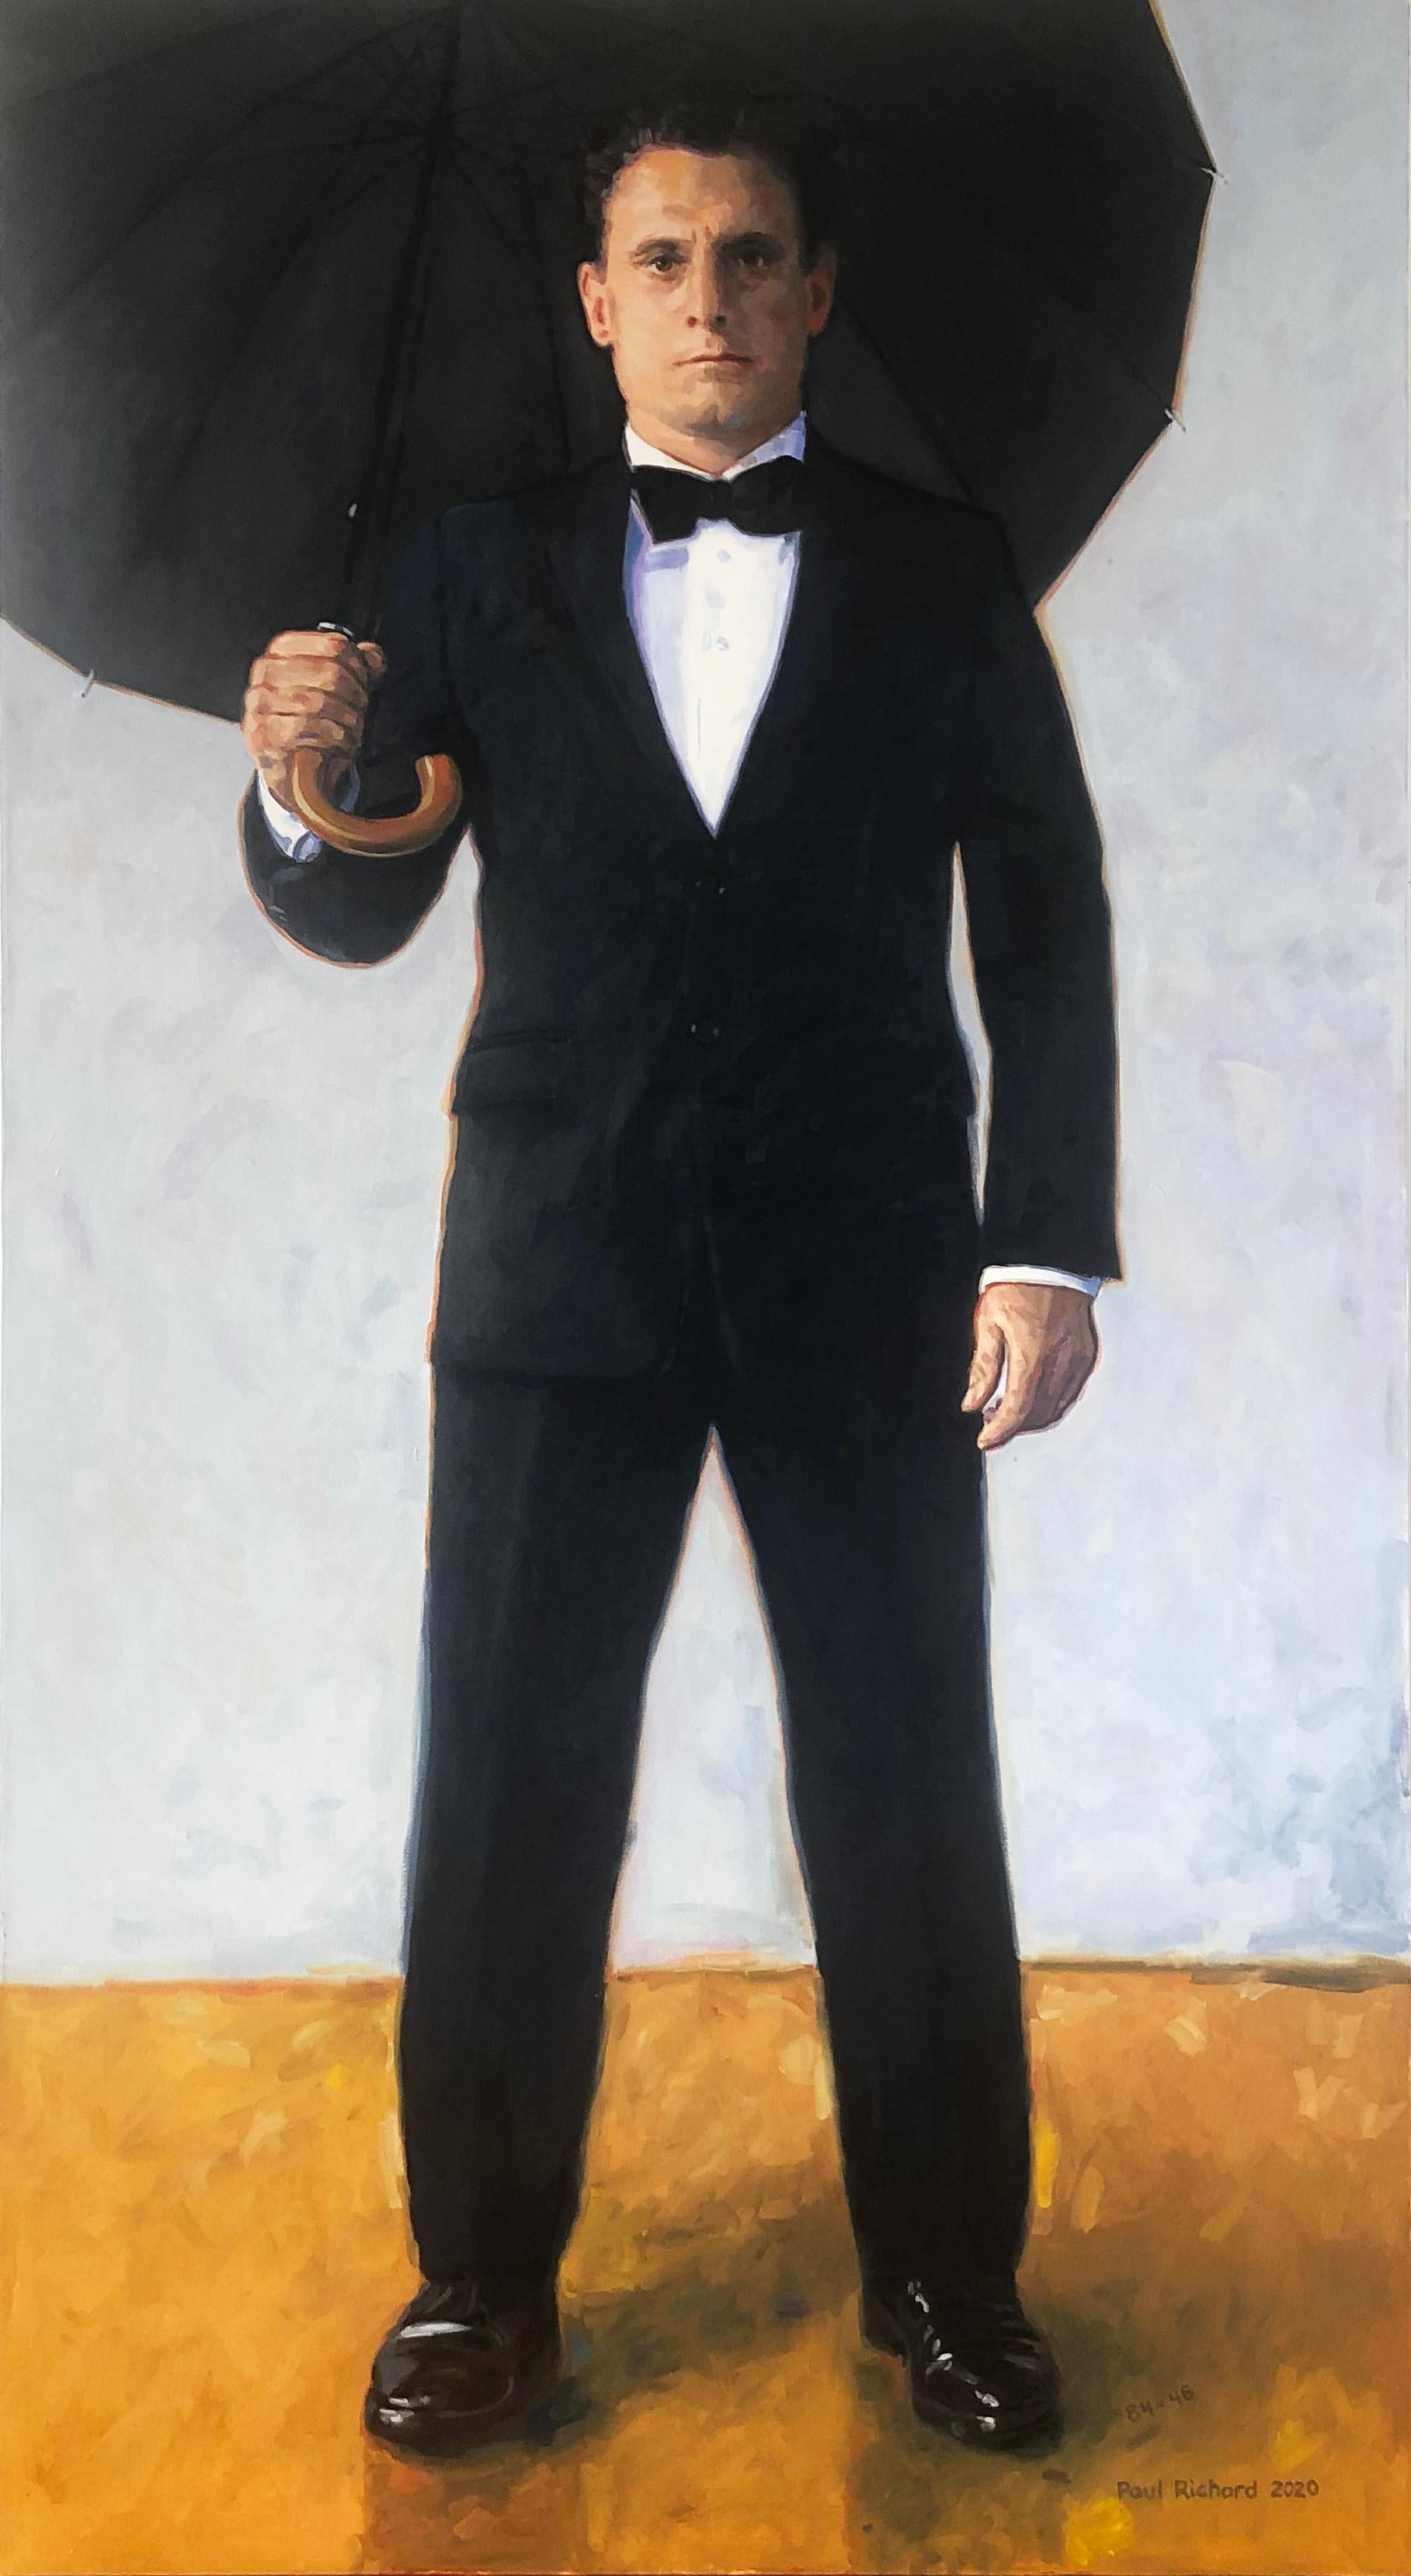 Paul Richard Portrait Painting - Umbrella Man